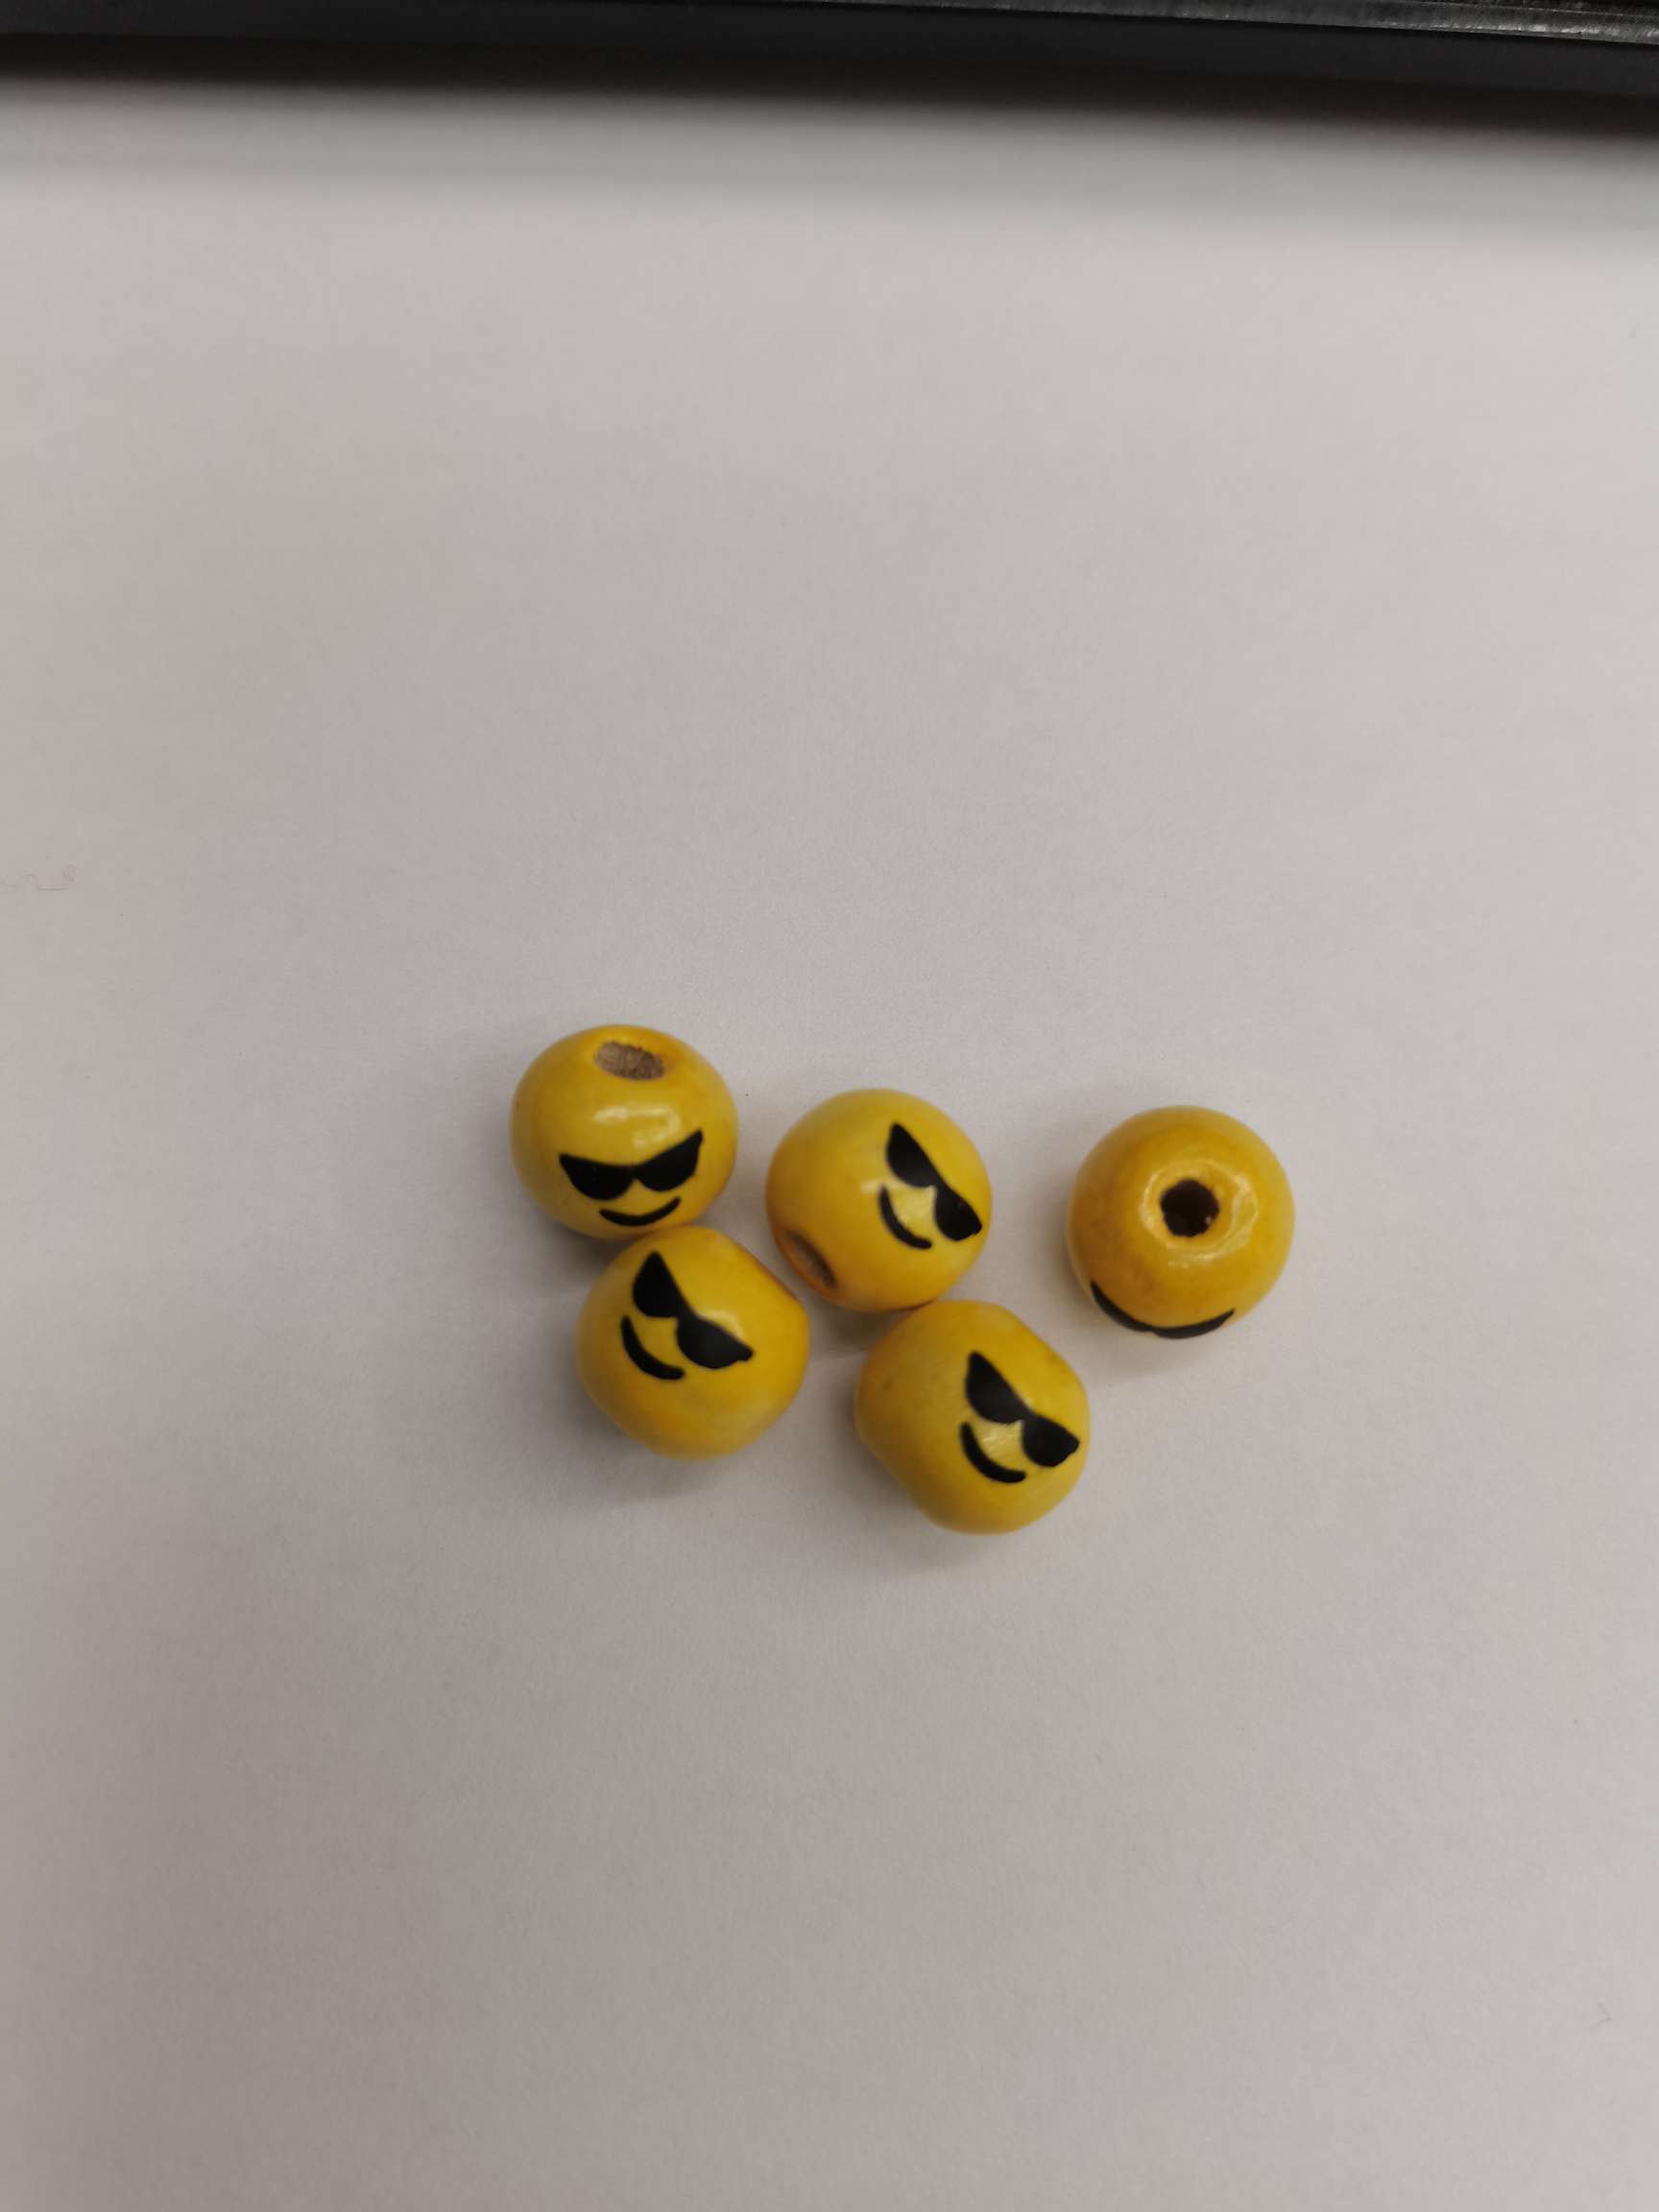 10mm木珠印刷表情脸 黄色笑脸木珠产品图